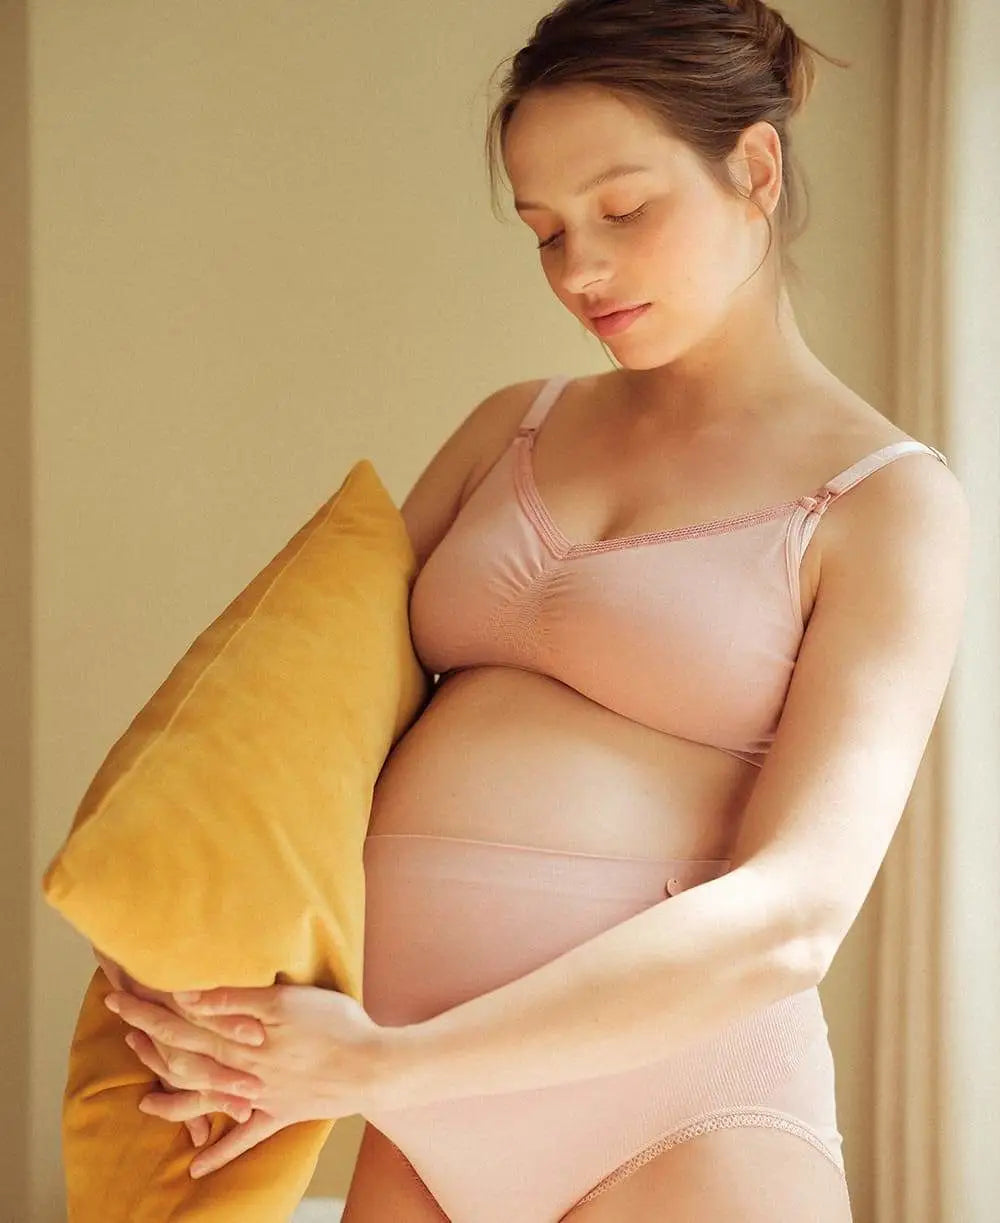 Nursing Bra Maternity Clothes For Pregnant Women Pregnancy